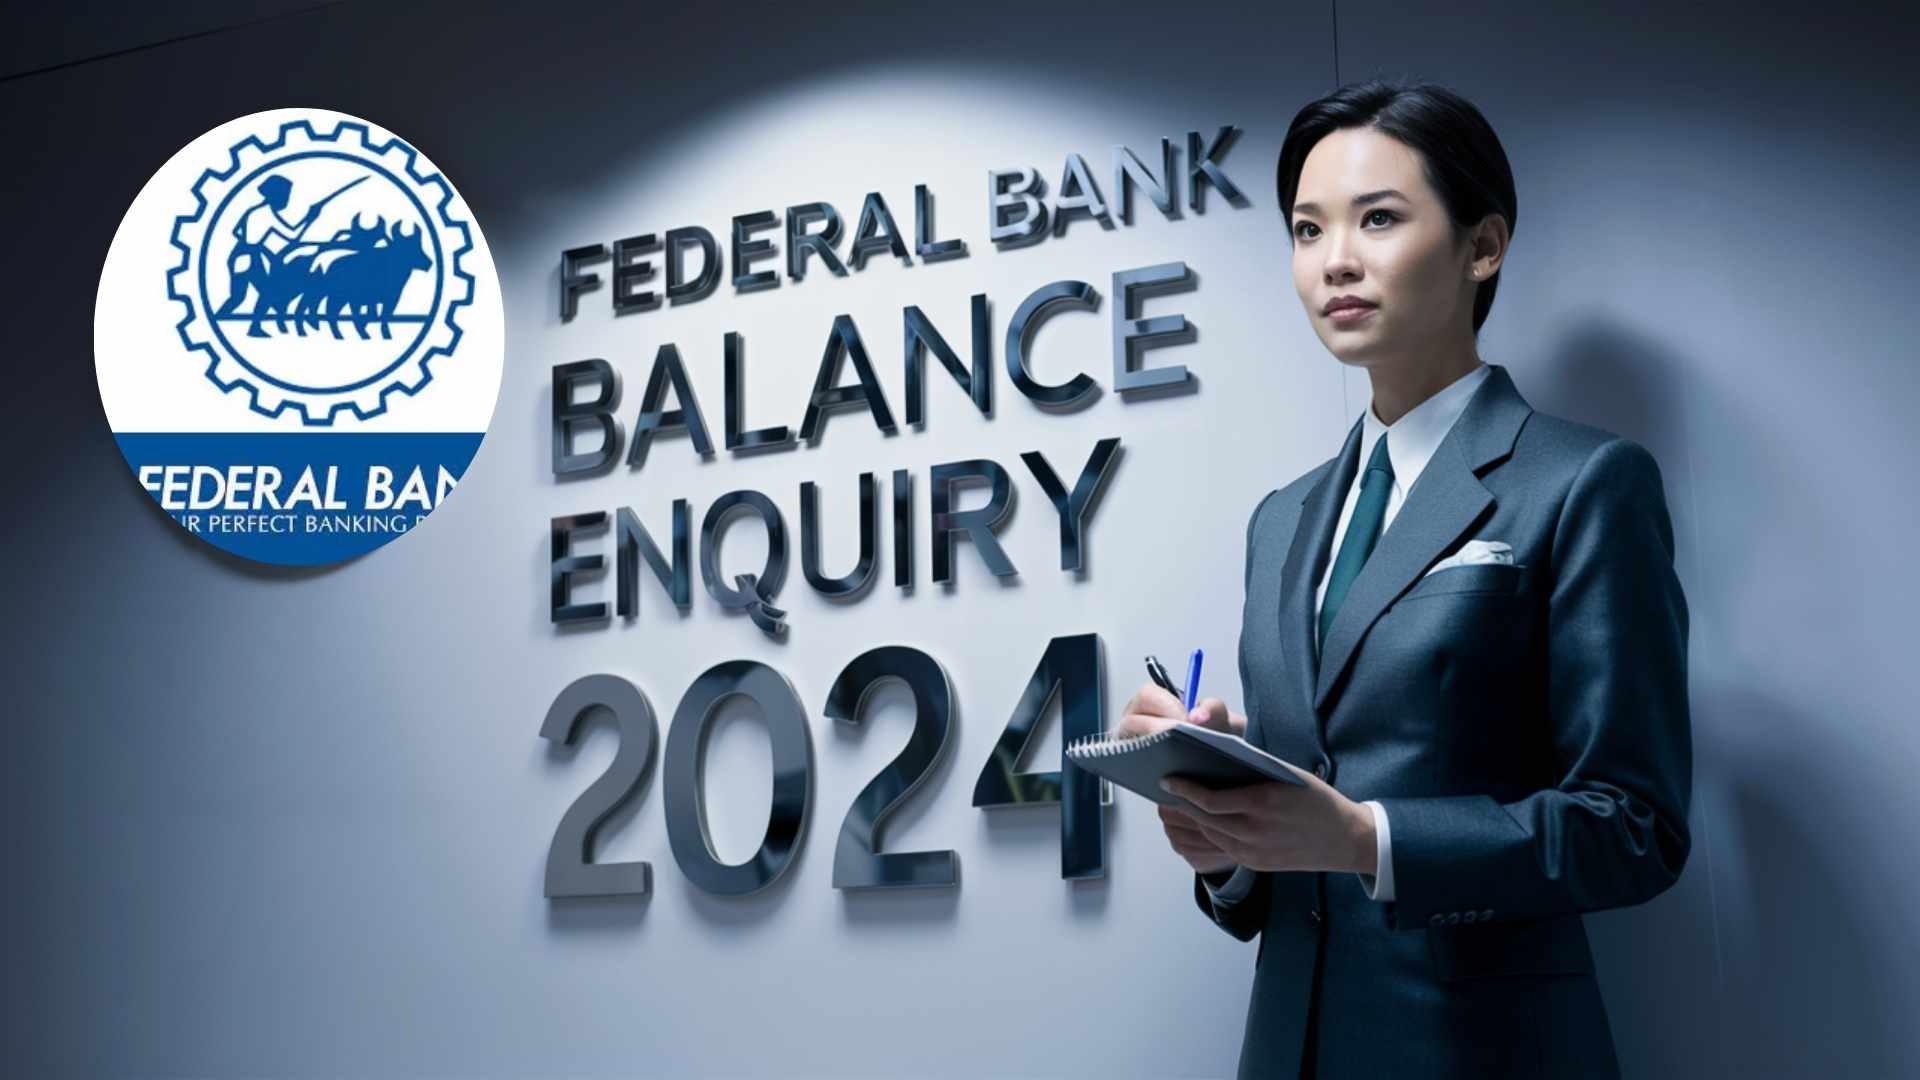 Federal Bank Balance Enquiry